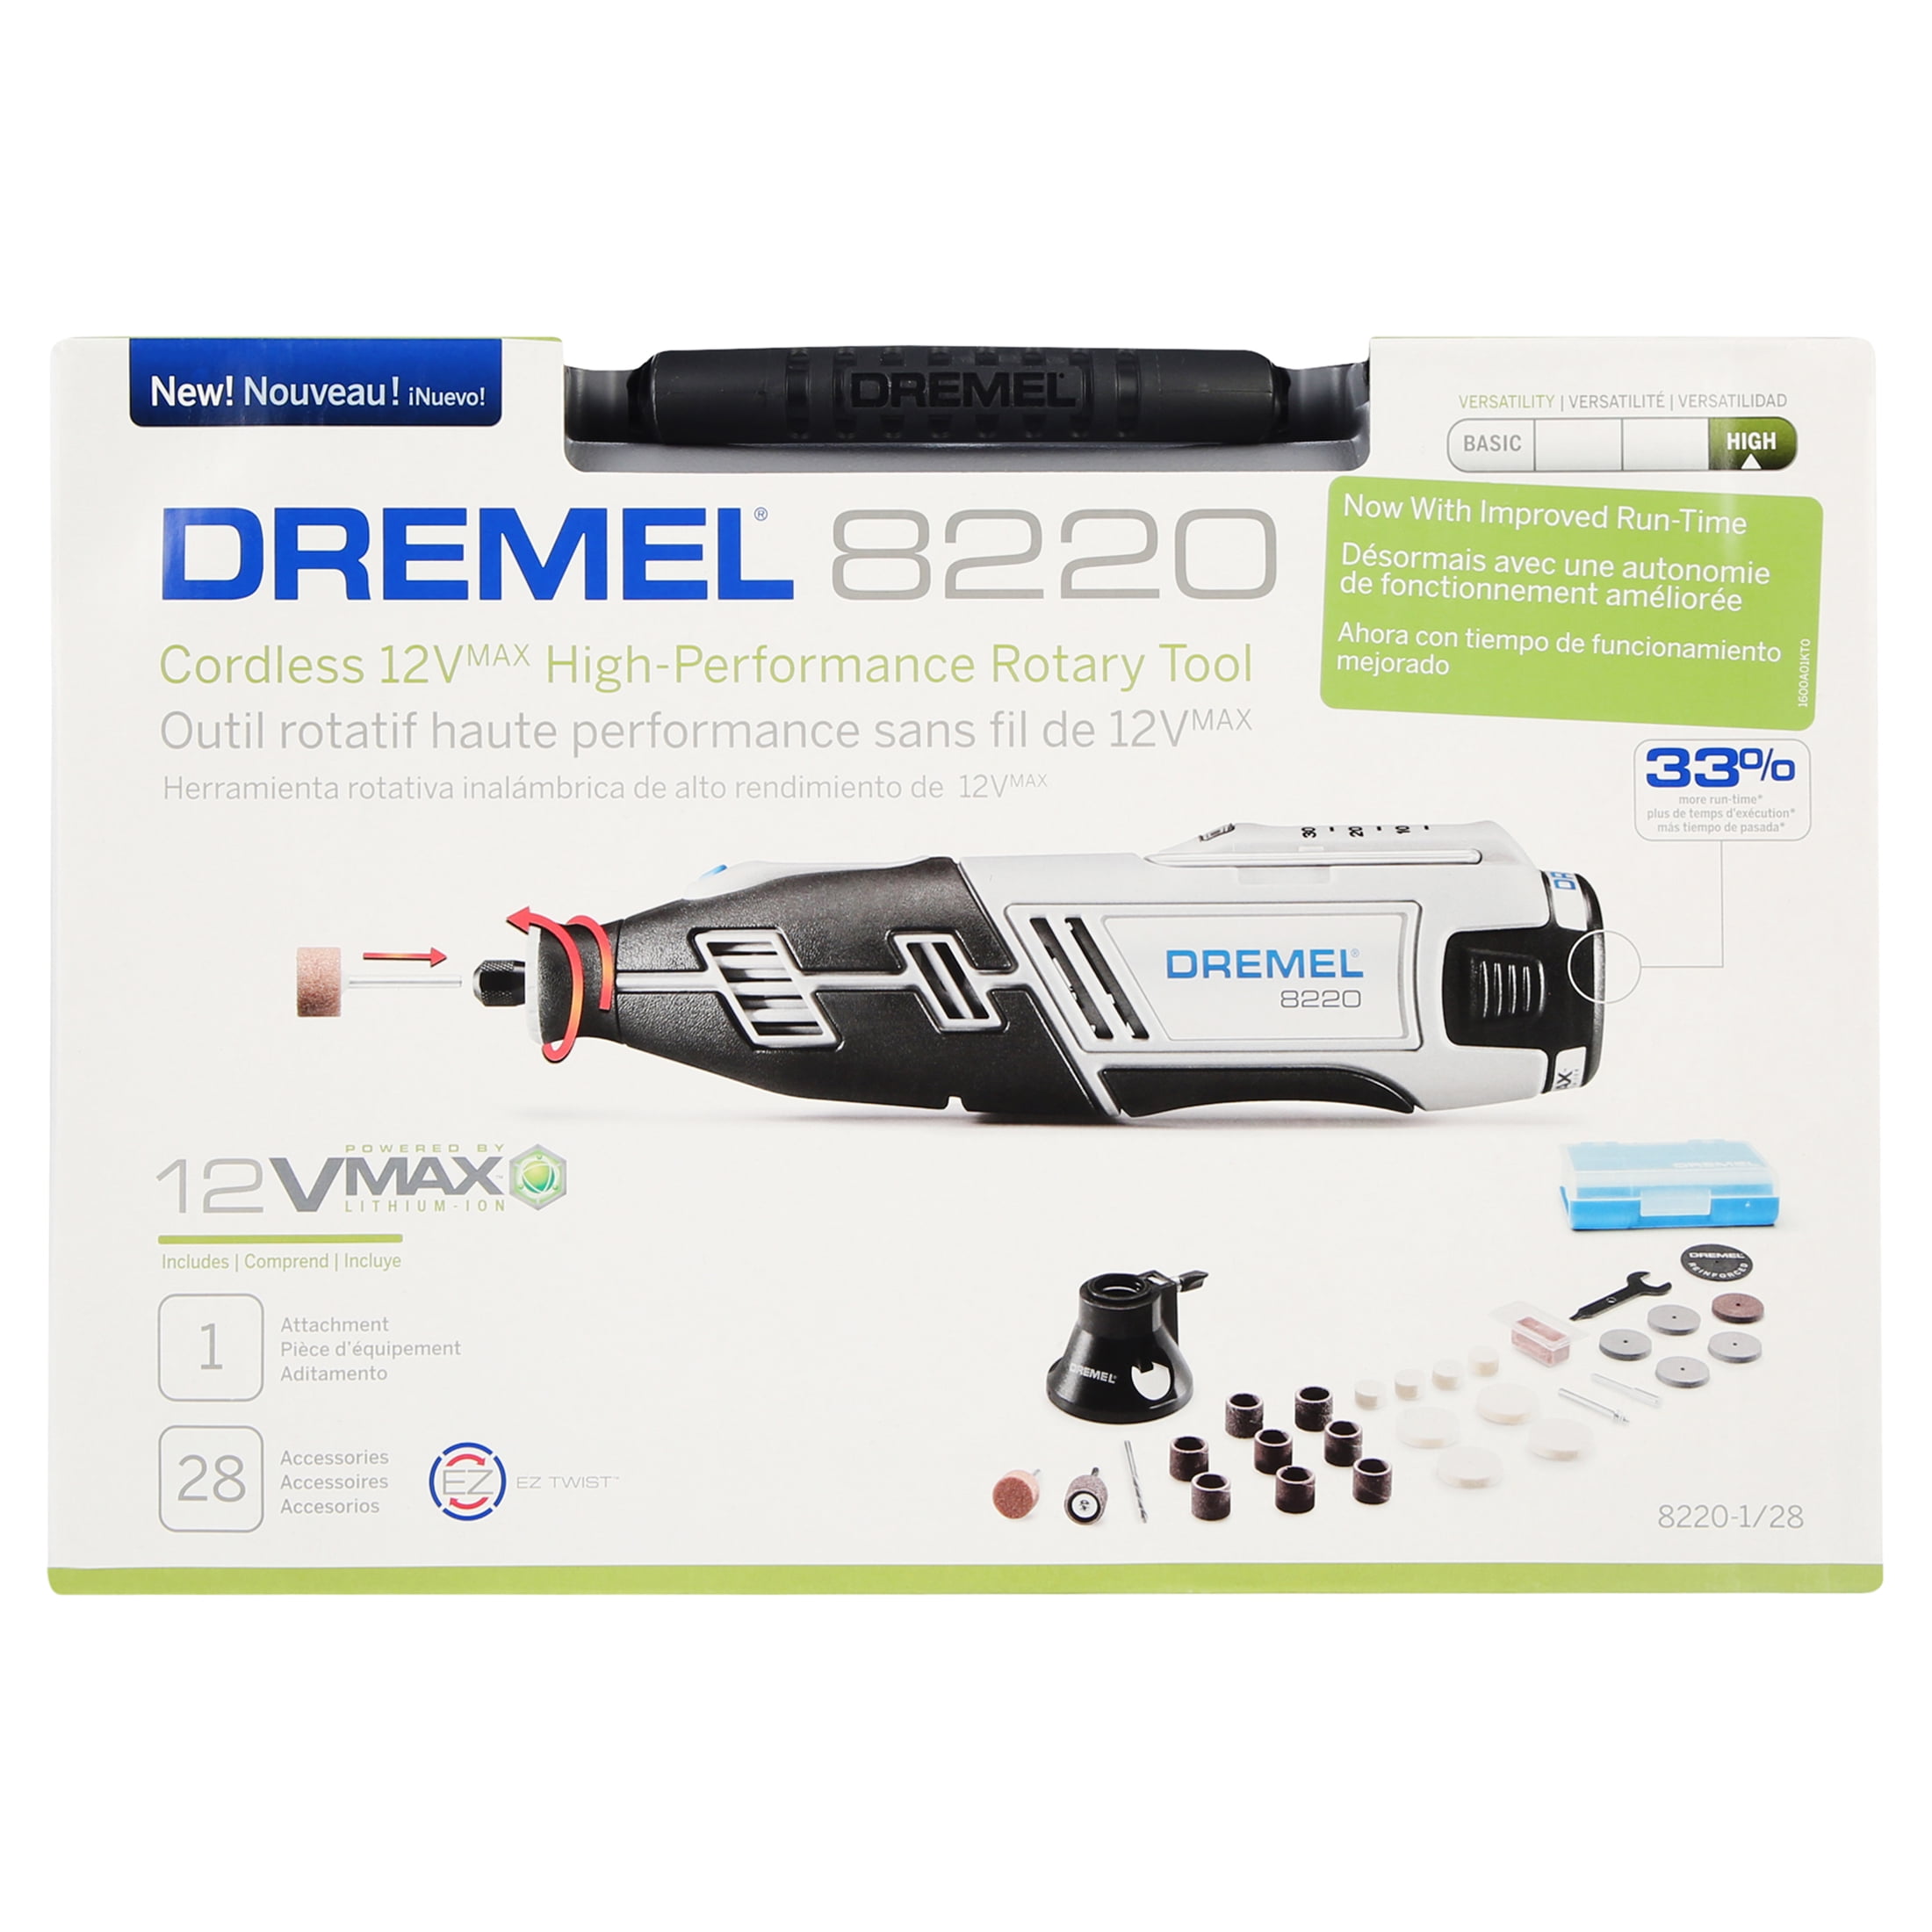 Dremel 8220-DR-RT Performance Variable Speed Rotary Tool Kit